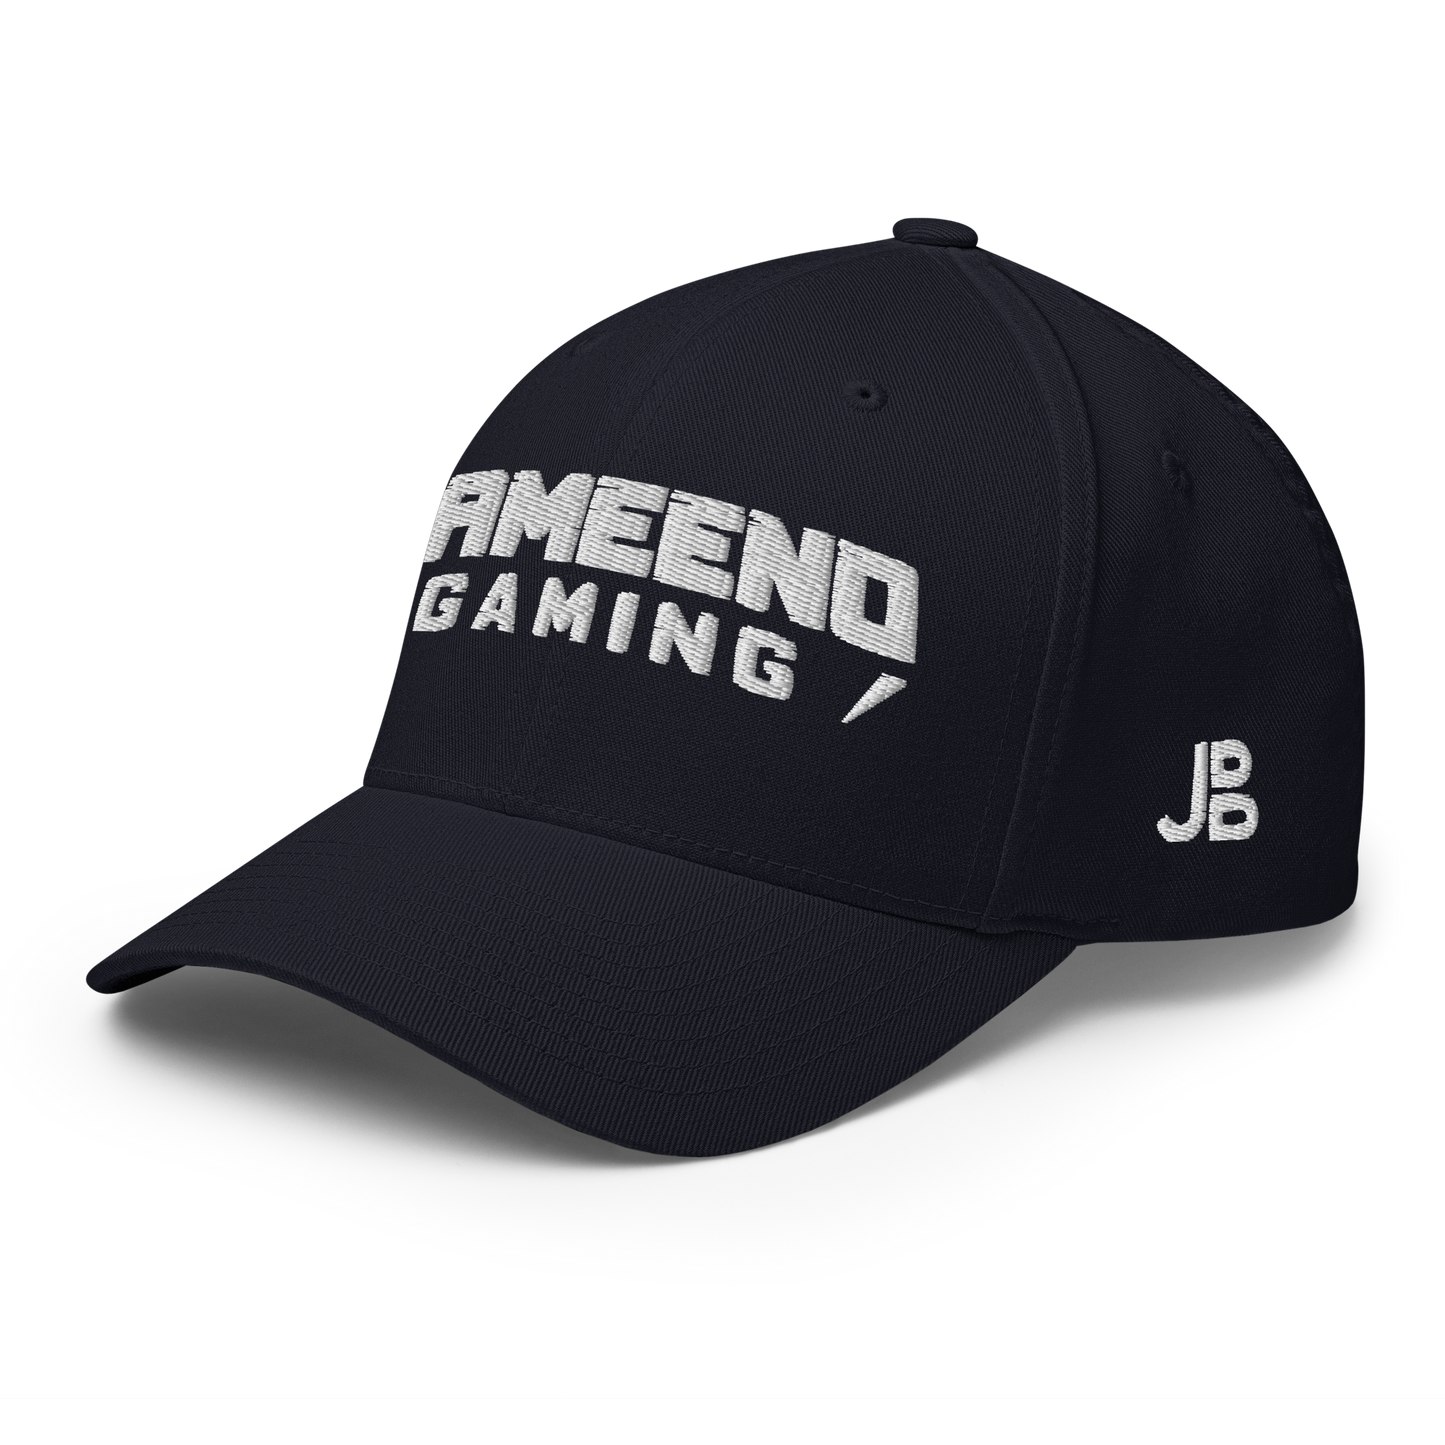 KAMEENO GAMING - Flexfit Cap